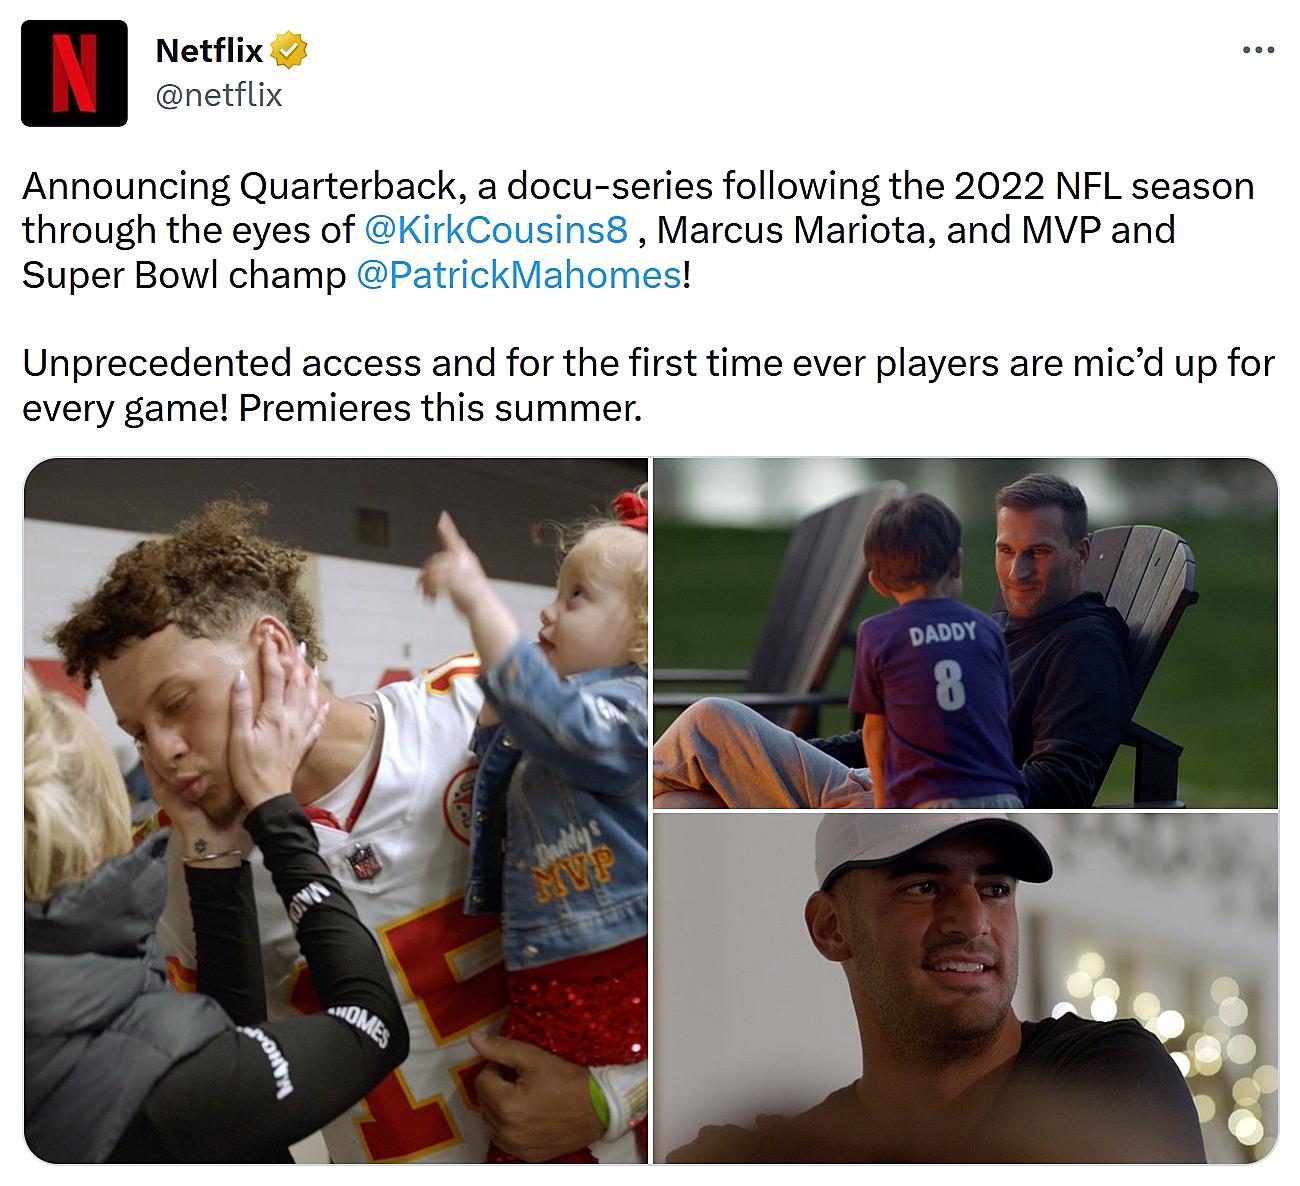 Netflix partners with NFL for new docu-series 'Quarterback' following  Patrick Mahomes, Kirk Cousins, Marcus Mariota